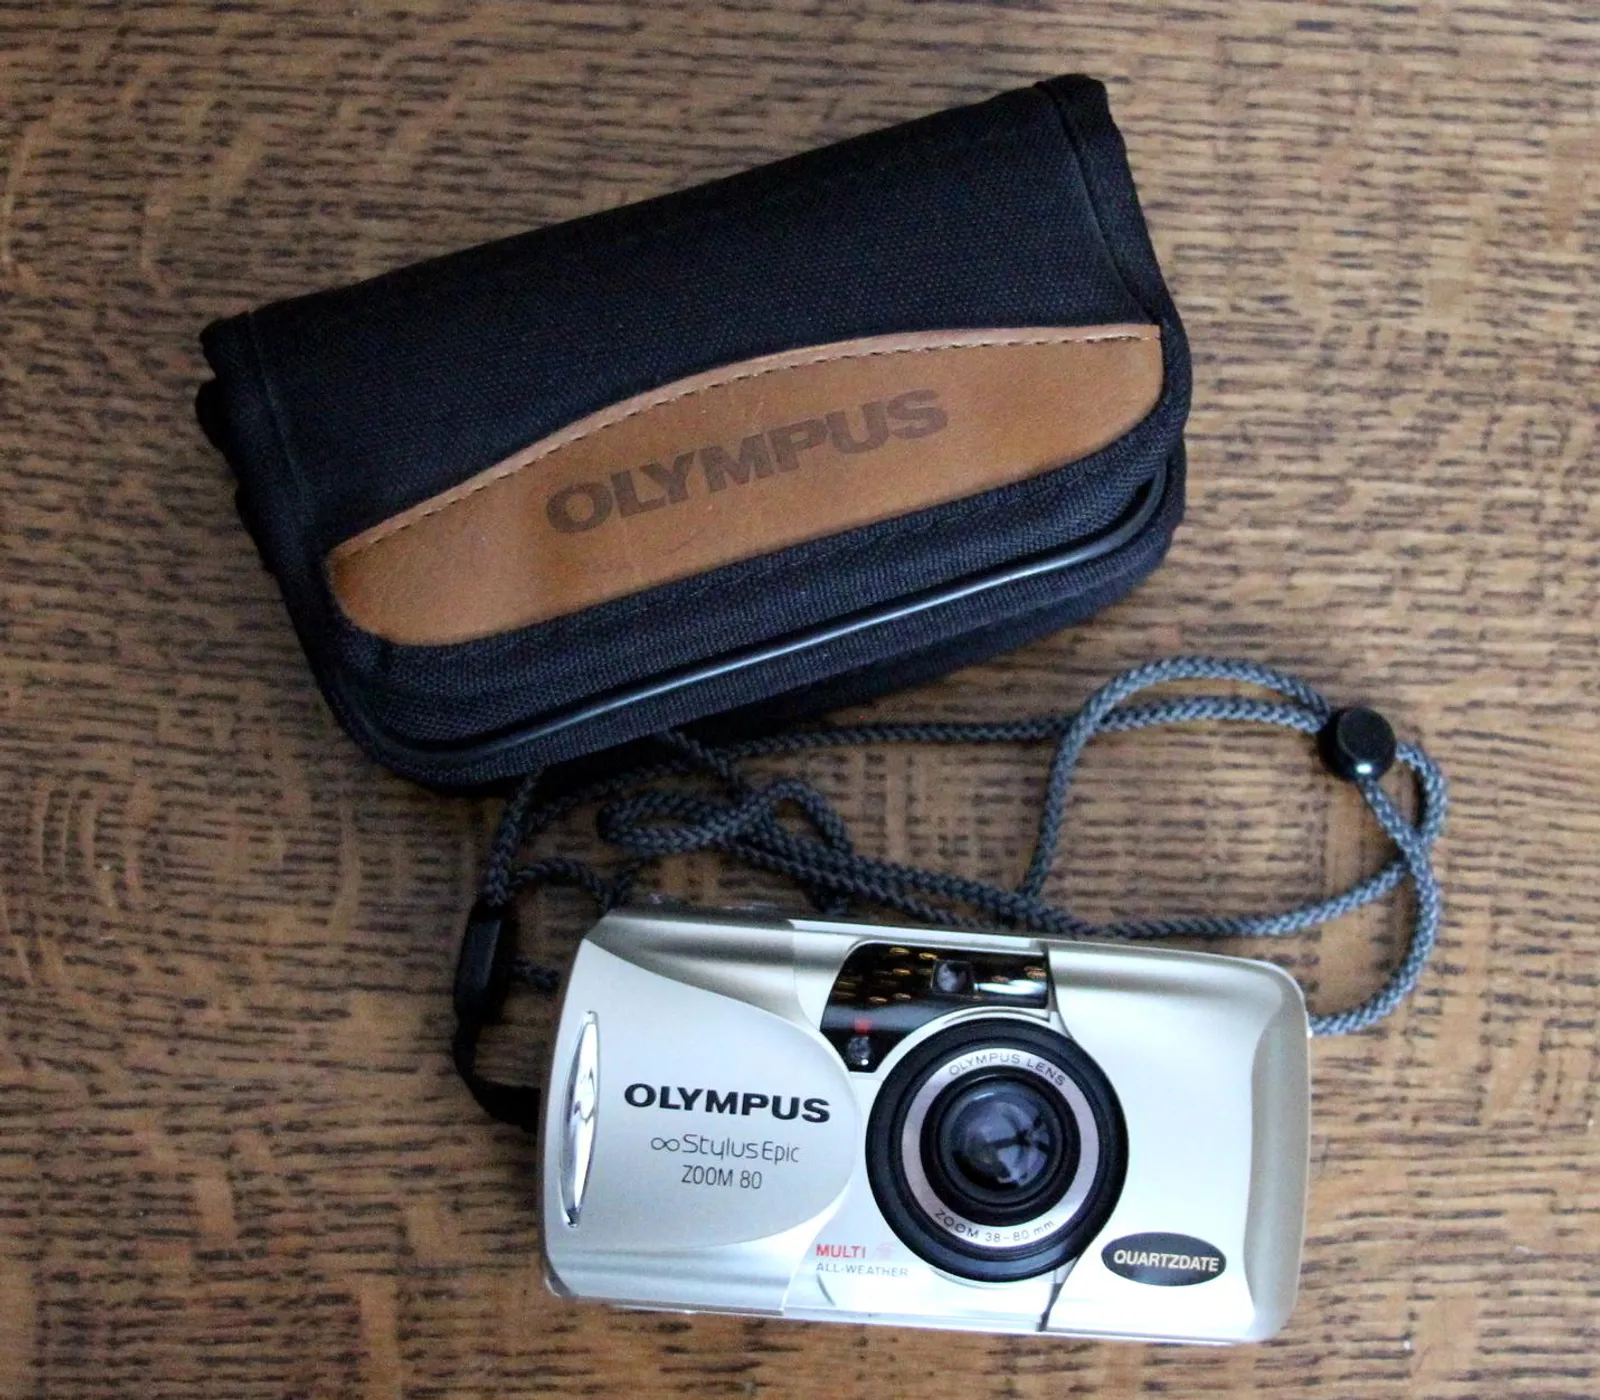 Olympus Stylus Epic Zoom 80 35mm Film Camera